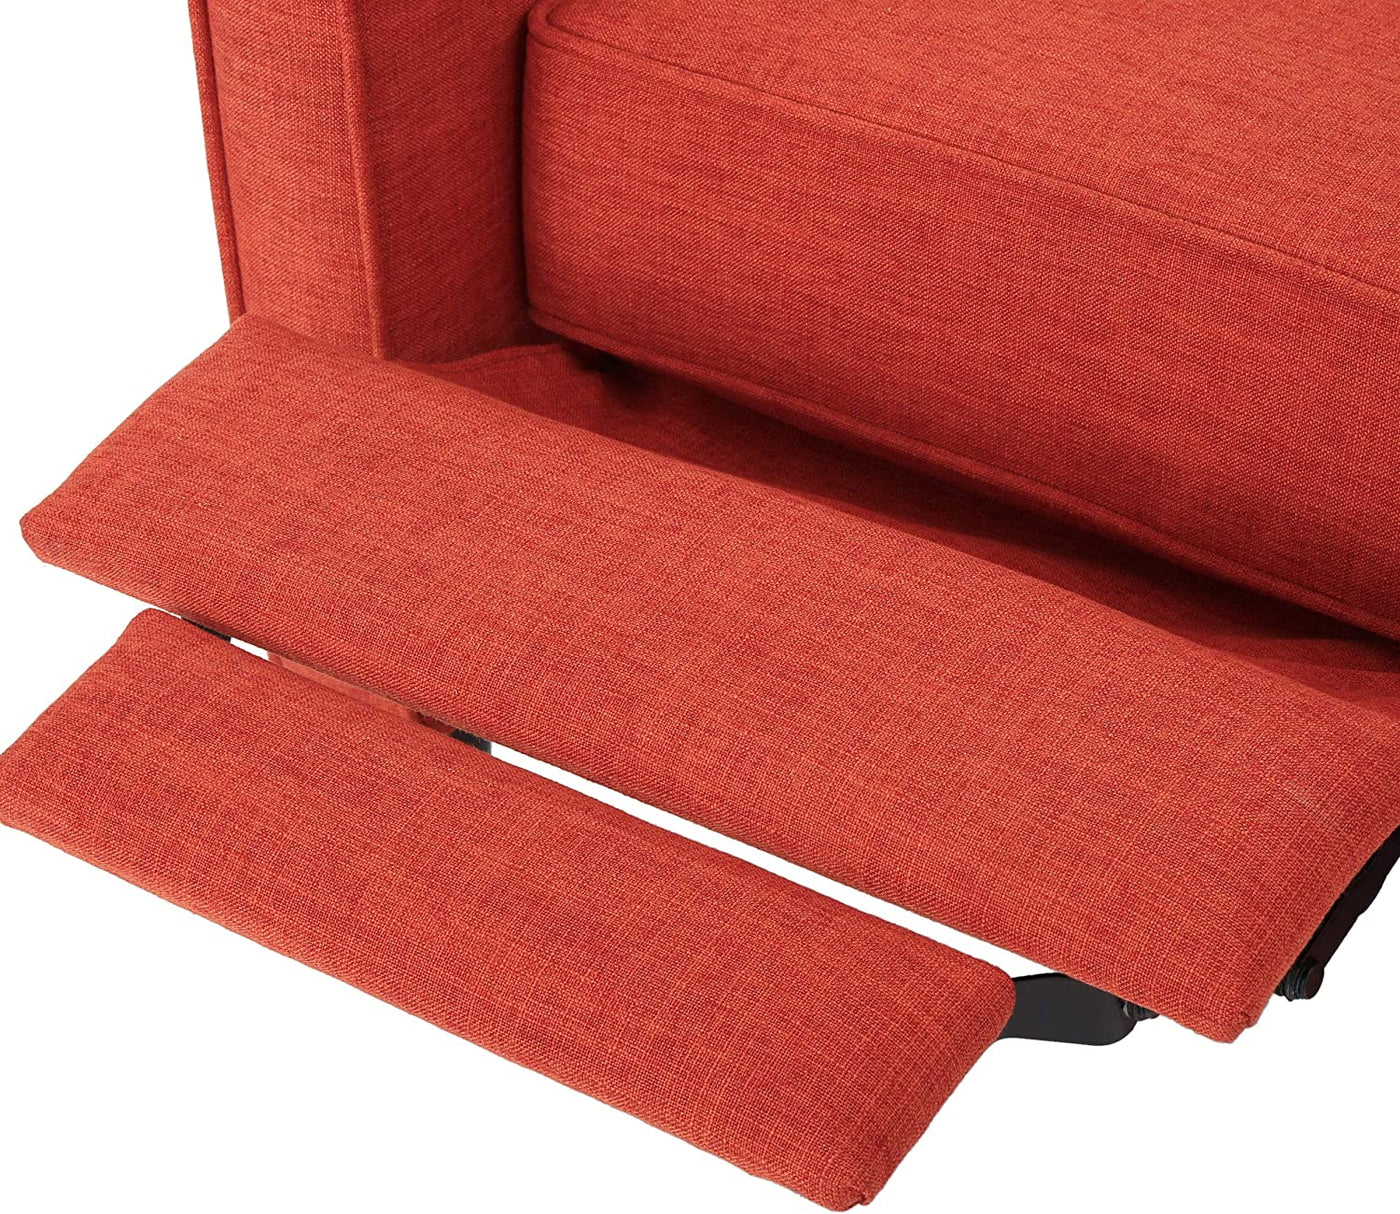 GDFStudio Macedonia Mid Century Modern Tufted Back Fabric Recliner (Muted Orange) - $150